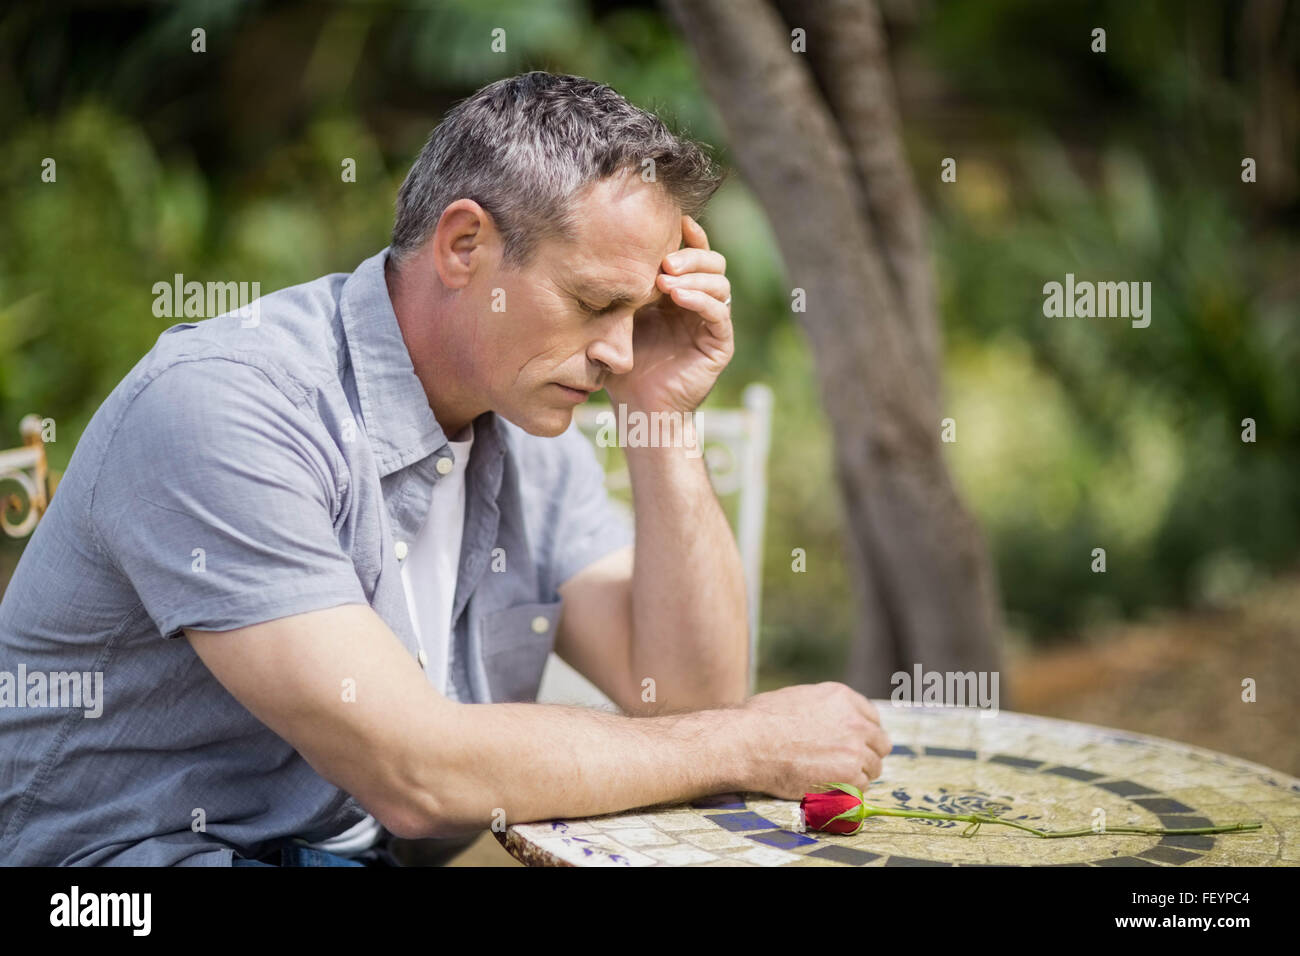 Depressed man touching his forehead Stock Photo